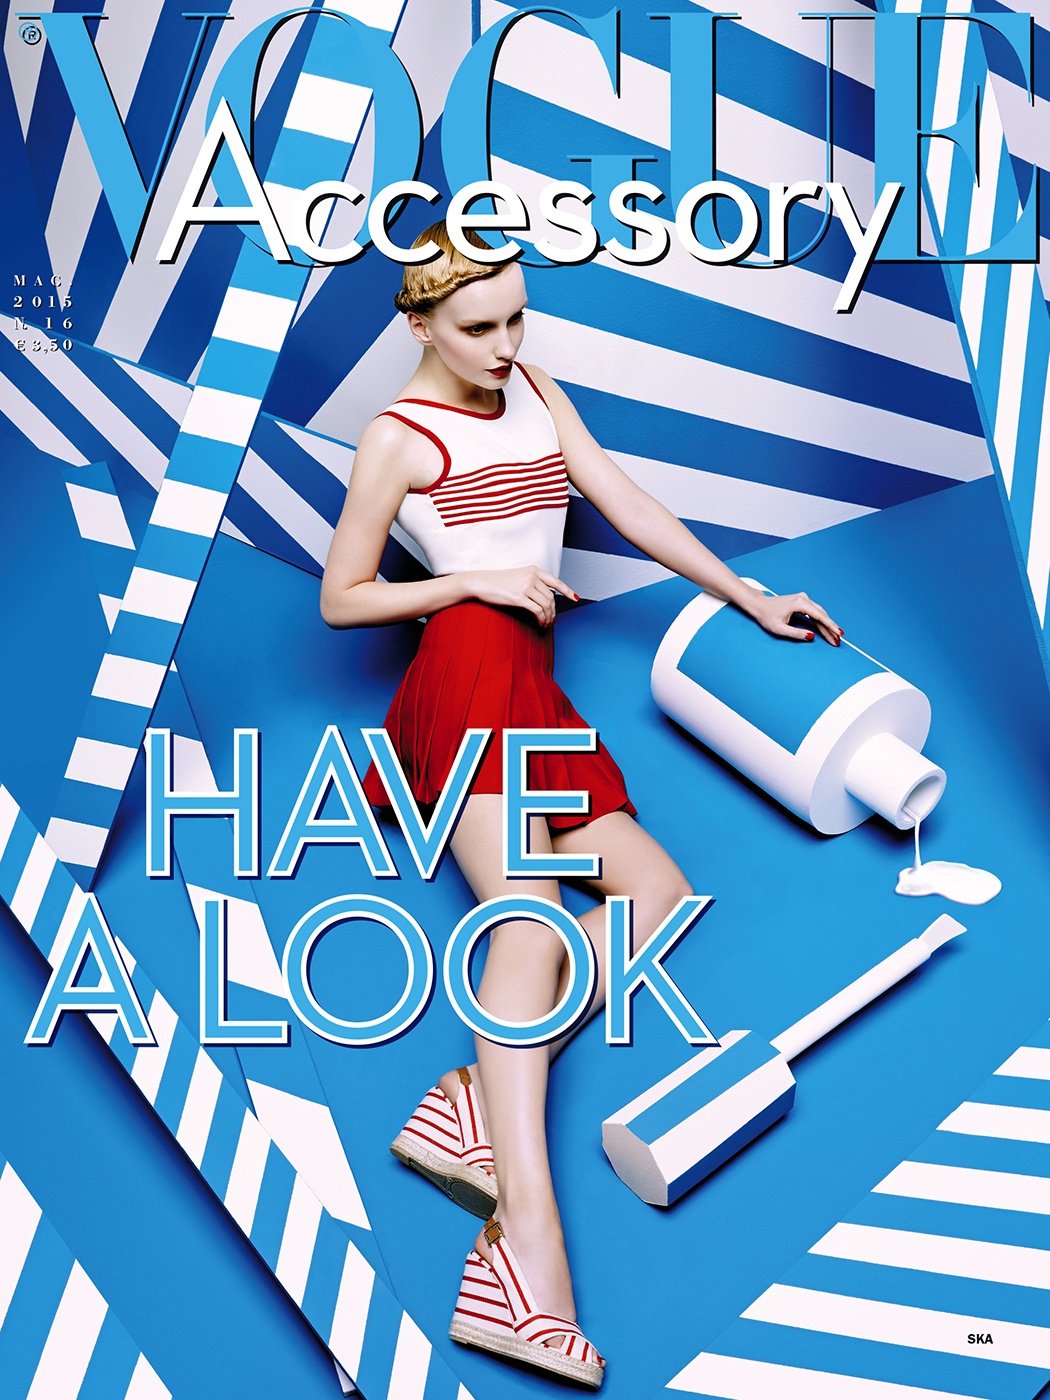 Vogue Accessory Cover SKA editorial conde nast